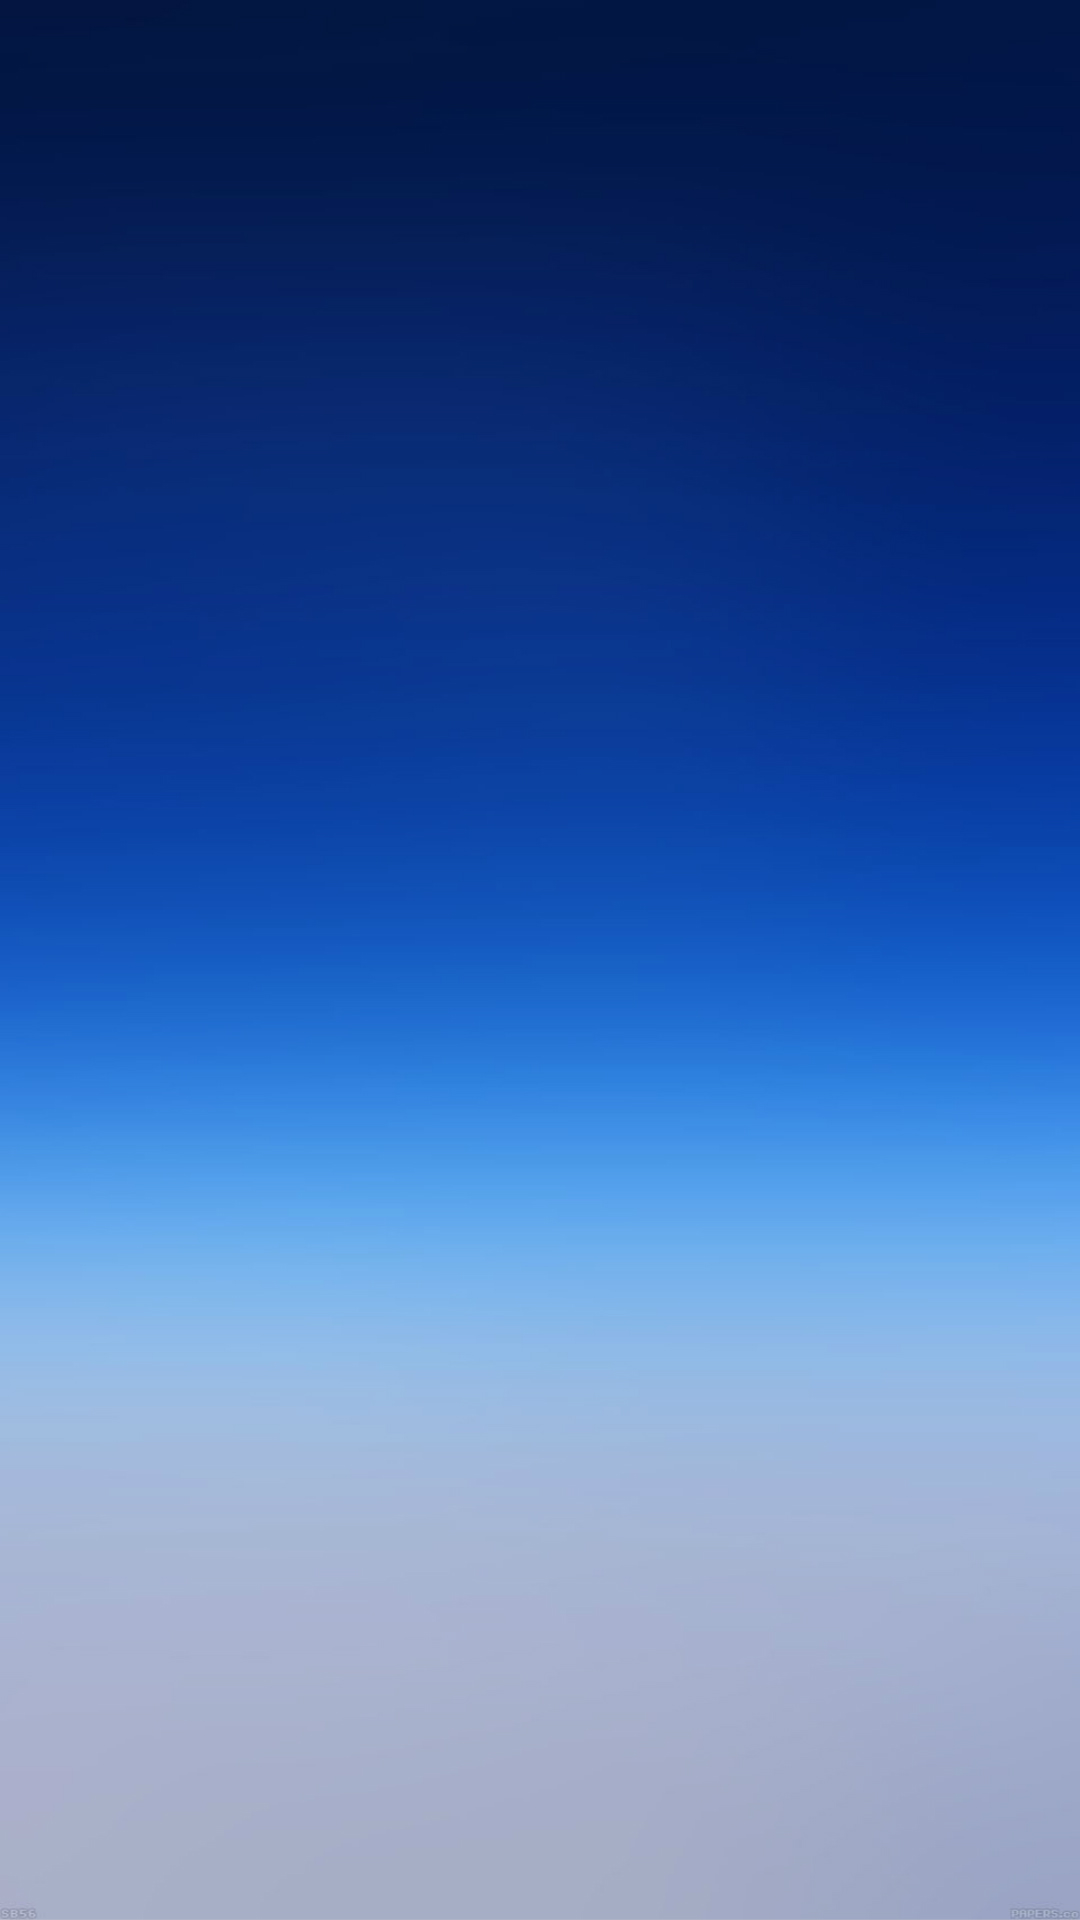 fondo de pantalla azul iphone 6,cielo,azul,tiempo de día,atmósfera,azul cobalto